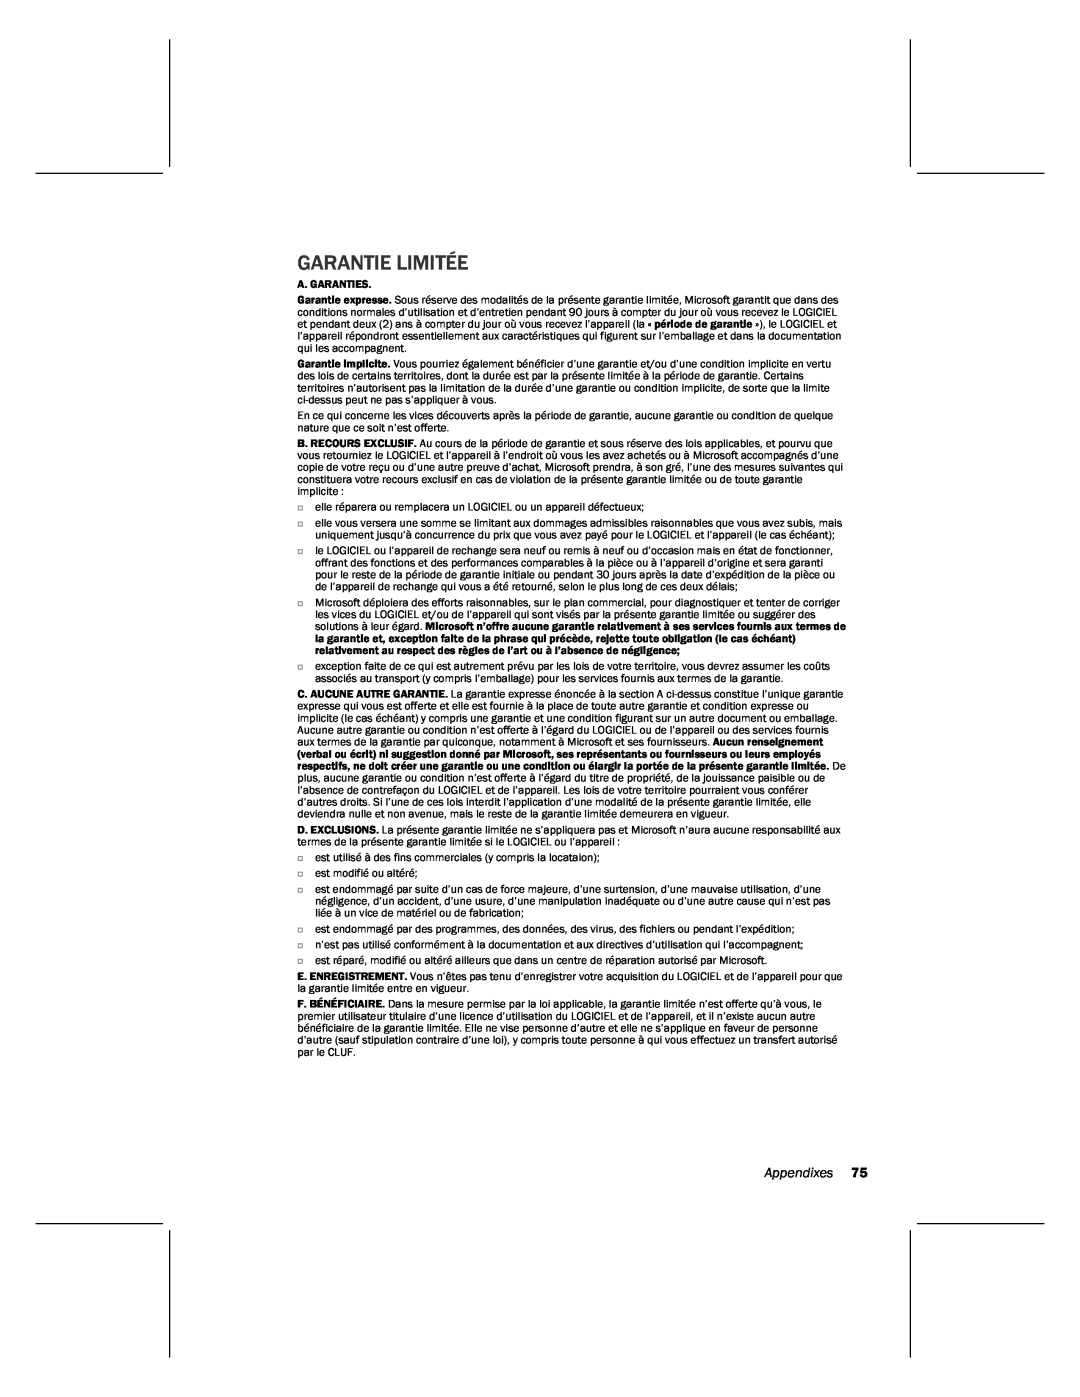 Microsoft MN-820 manual Garantie Limitée, Appendixes 